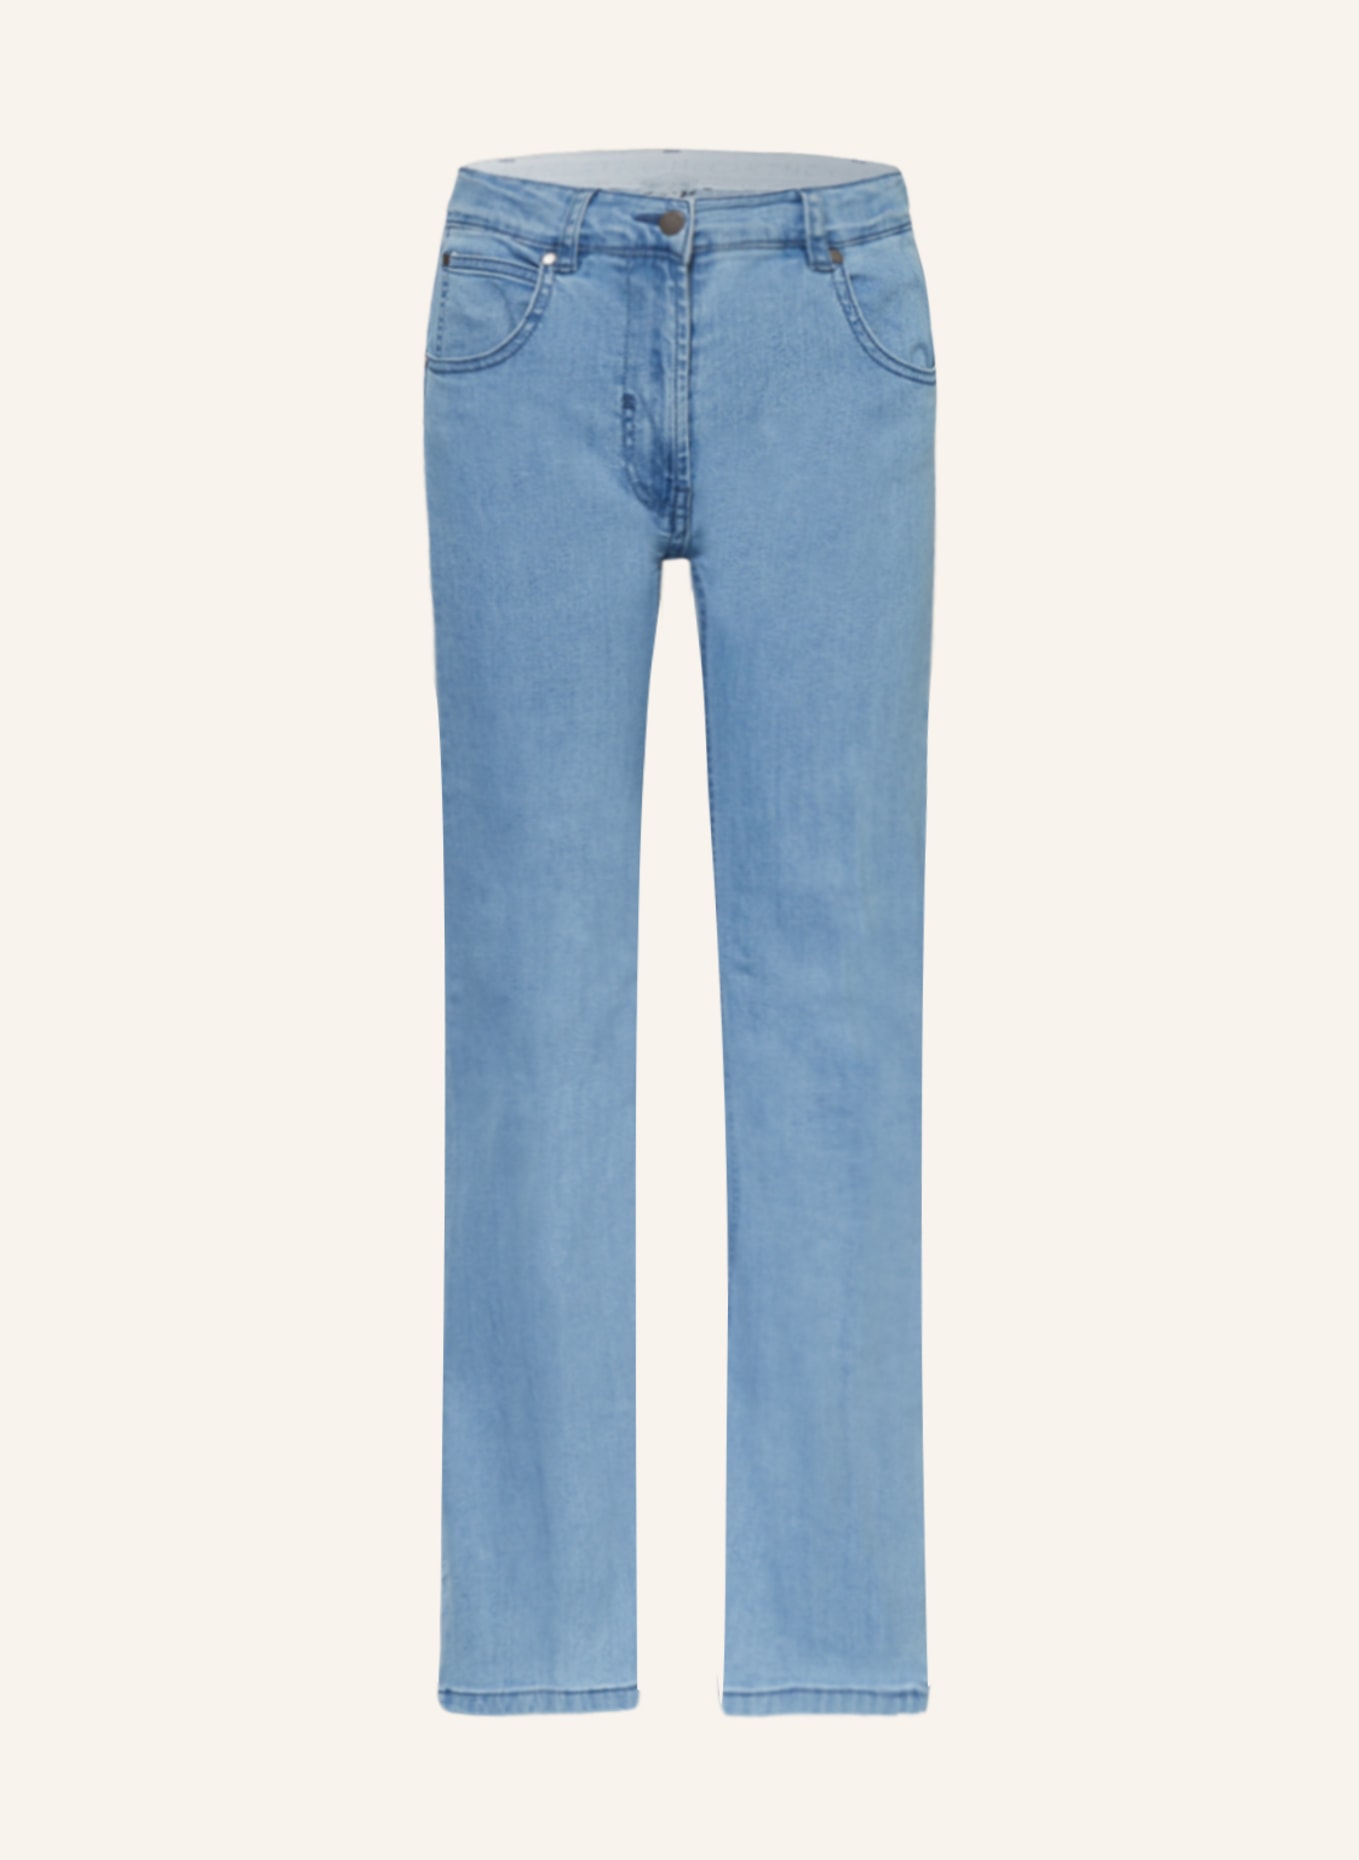 STELLA McCARTNEY KIDS Jeans, Farbe: 614 BLUE (Bild 1)